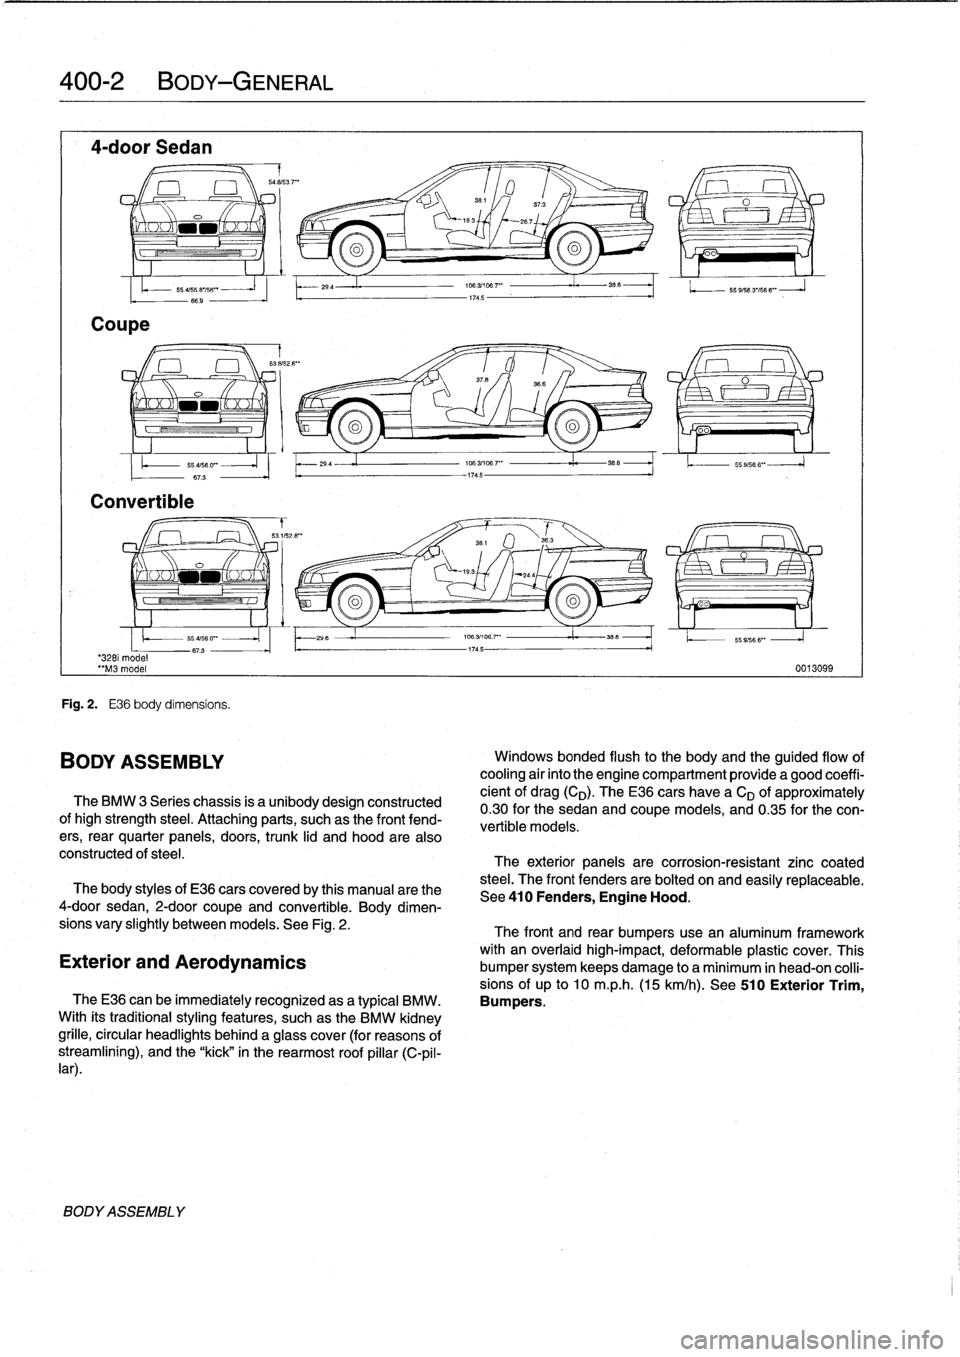 BMW 328i 1994 E36 Workshop Manual 
400-2
BODY-GENERAL

4-door
Sedan

Coupe

-
saas3
.7""

351
/

	

37
.3
O

	

I
x
`-193

	

267

o
oa

3281
model
"M3
model

Convertible

BODYASSEMBLY

55
ass
.e
iss
""
-
66
.9
-

Fig
.
2
.

	

E36
b